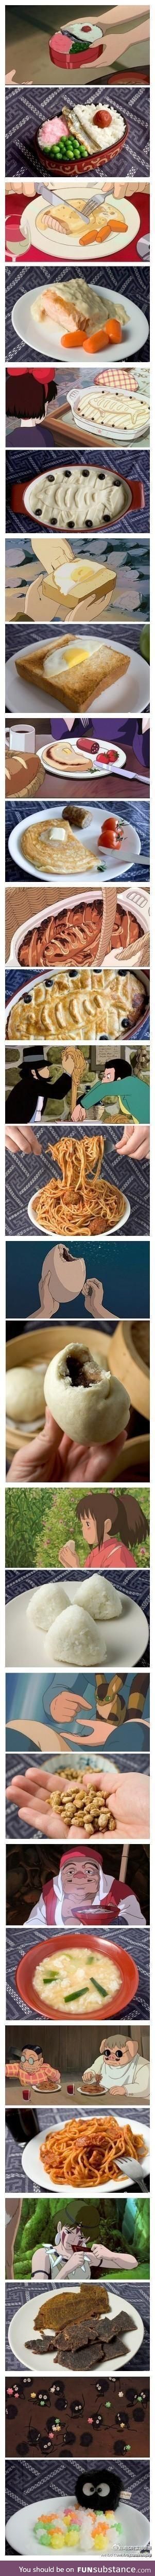 The Food of Studio Ghibli